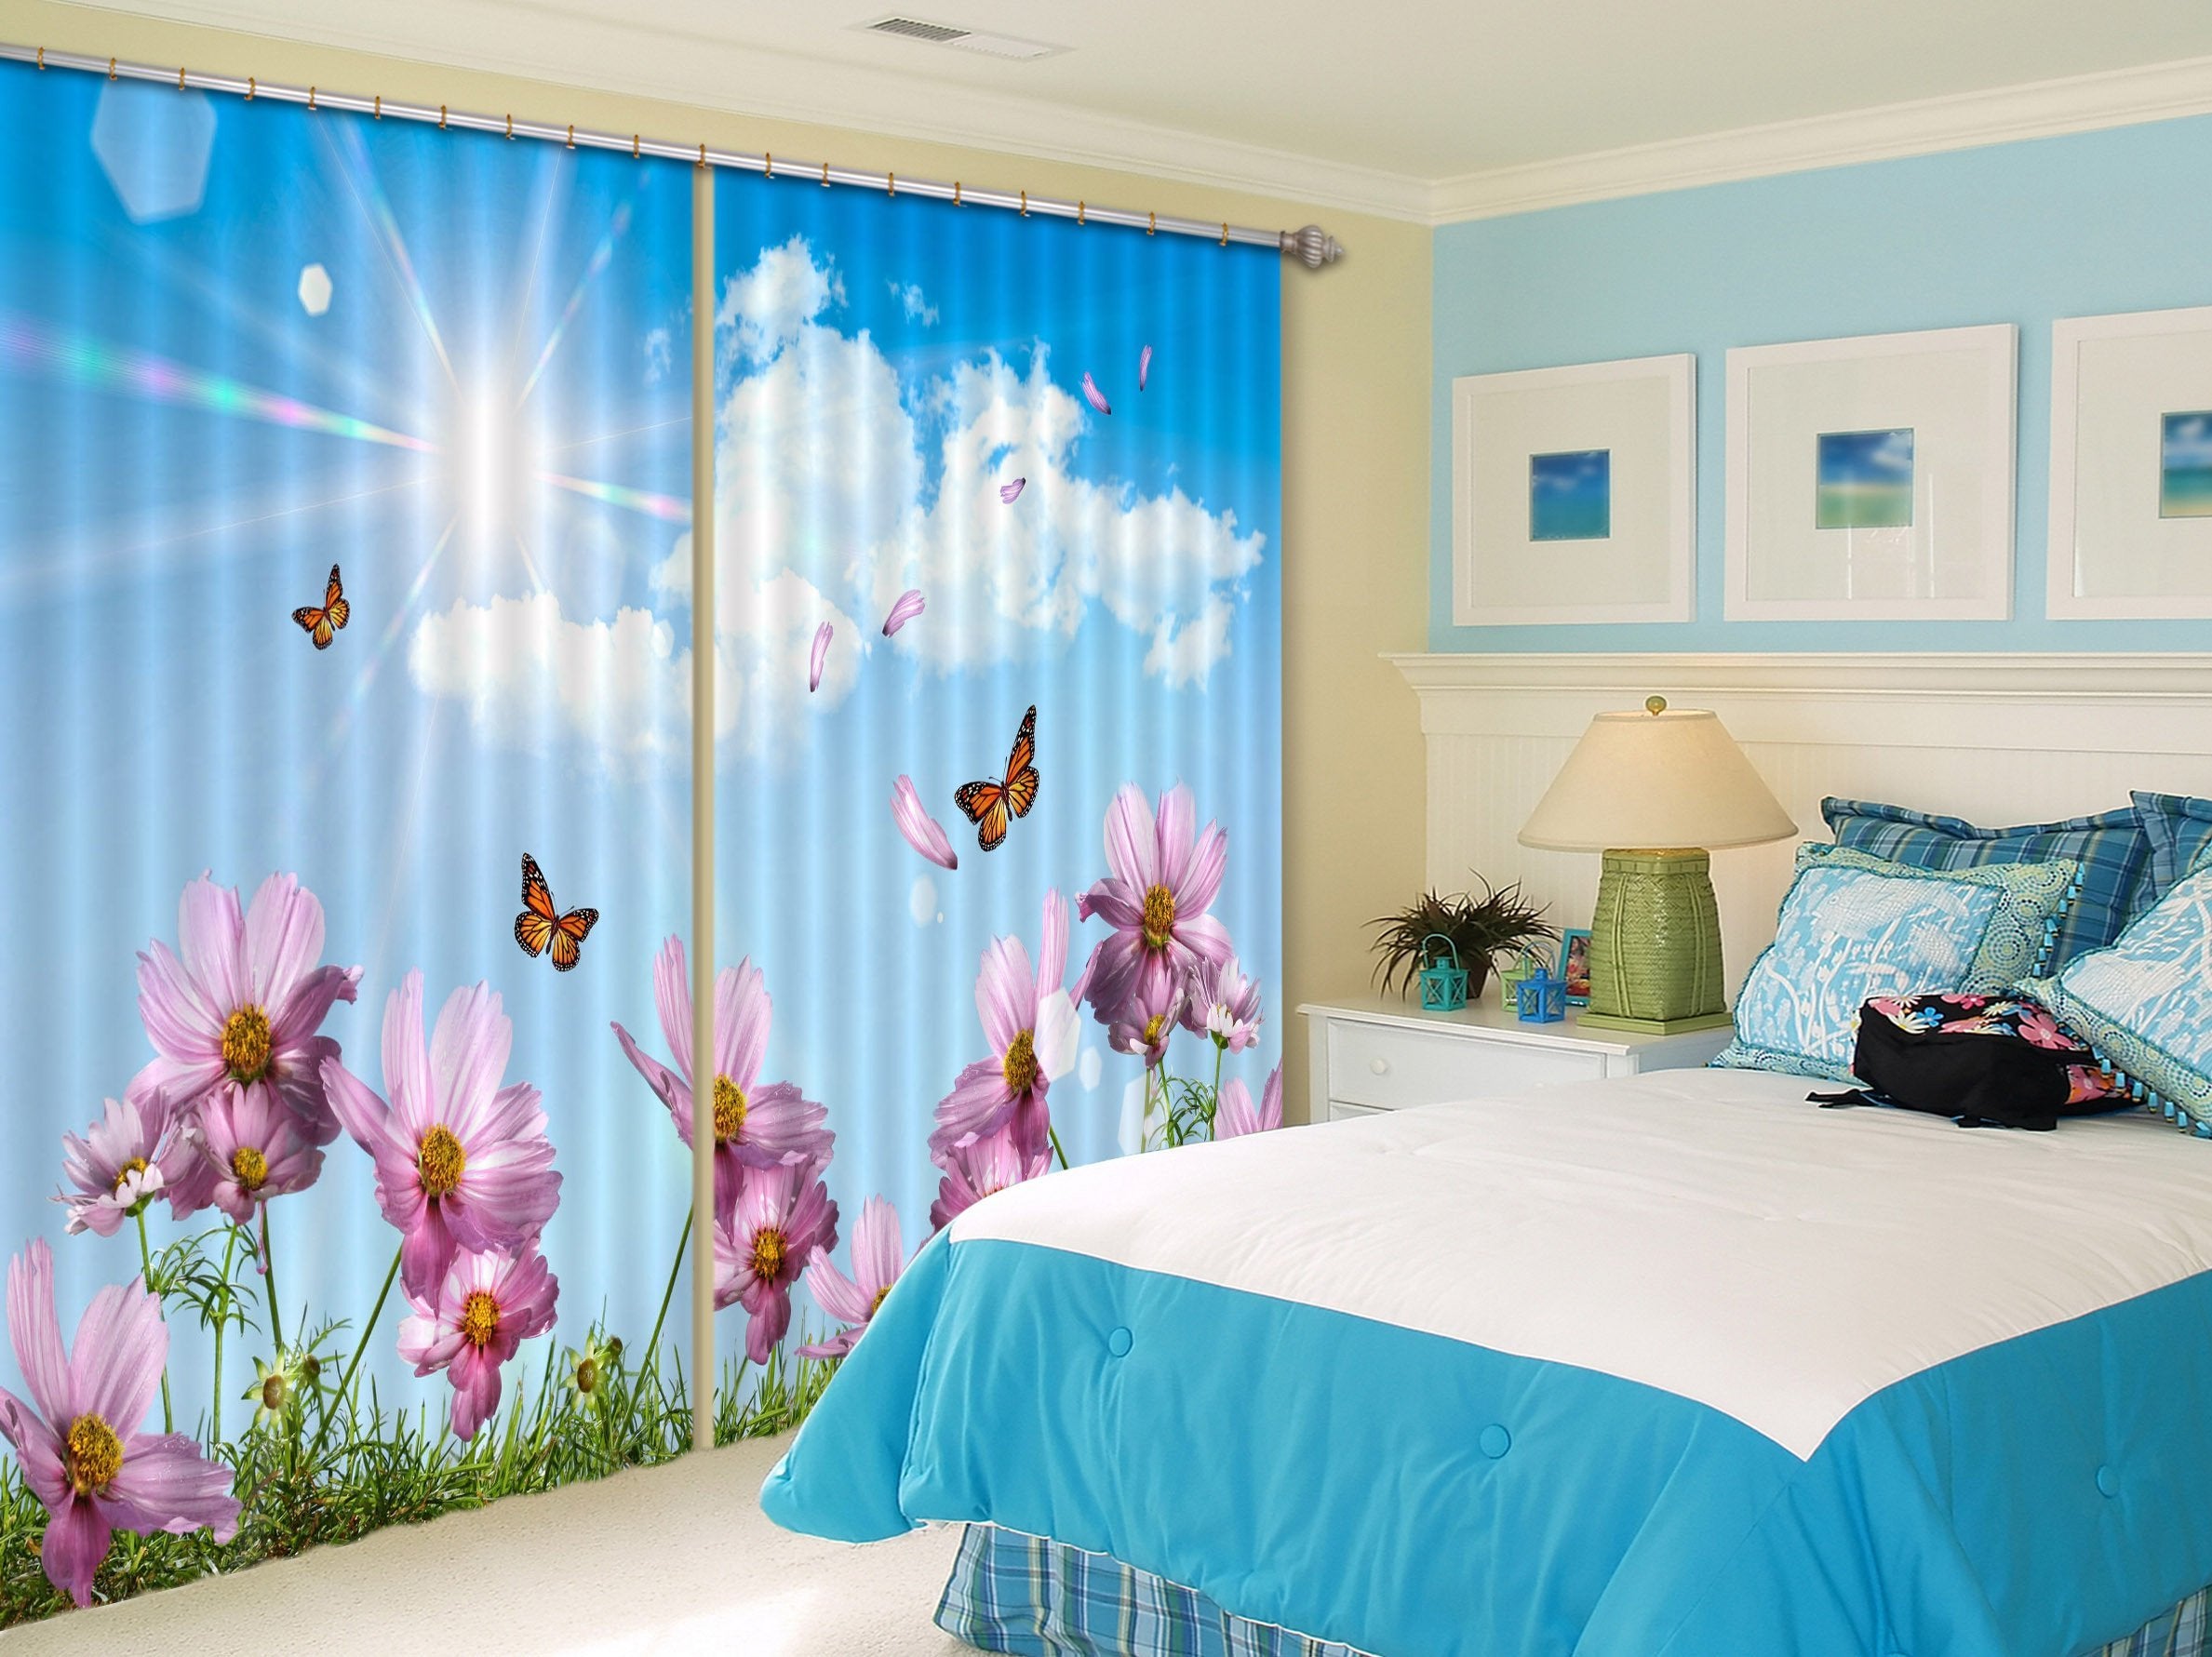 3D Flying Flowers Butterflies 285 Curtains Drapes Wallpaper AJ Wallpaper 